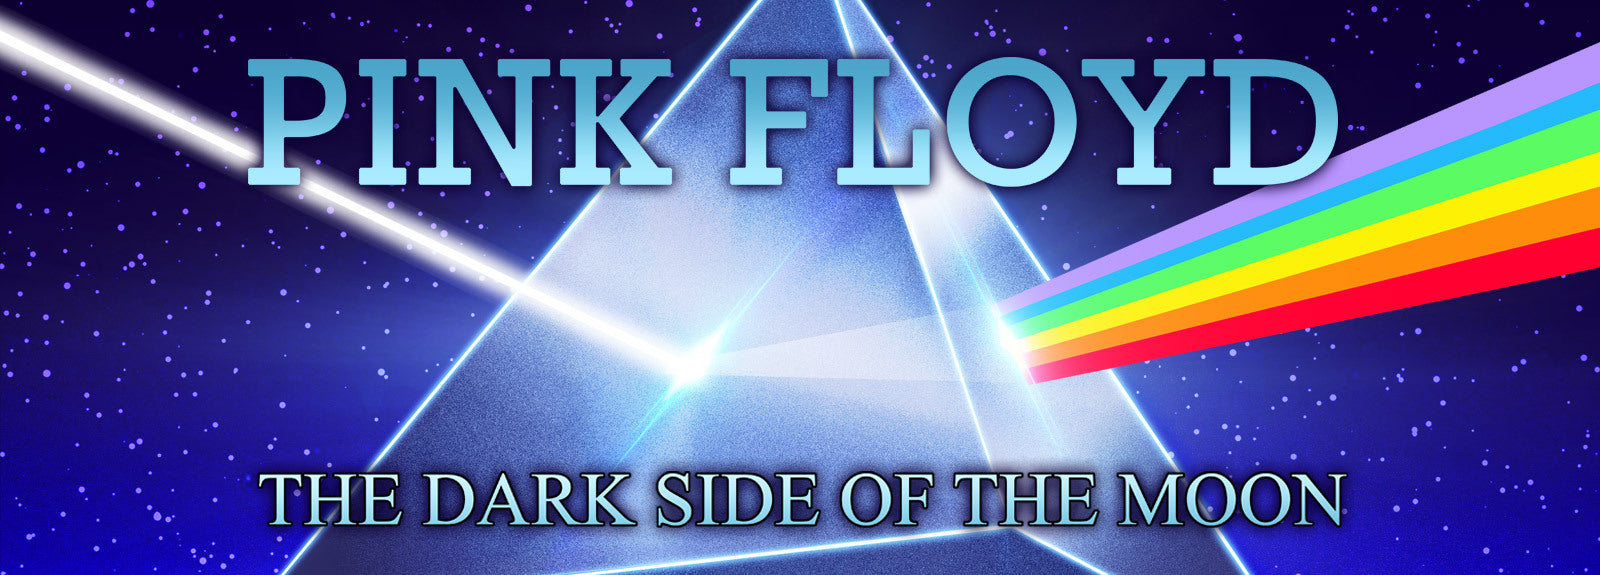 Best Louis Vuitton 3D Pink Hologram Logo In Pink Floyd Style Black